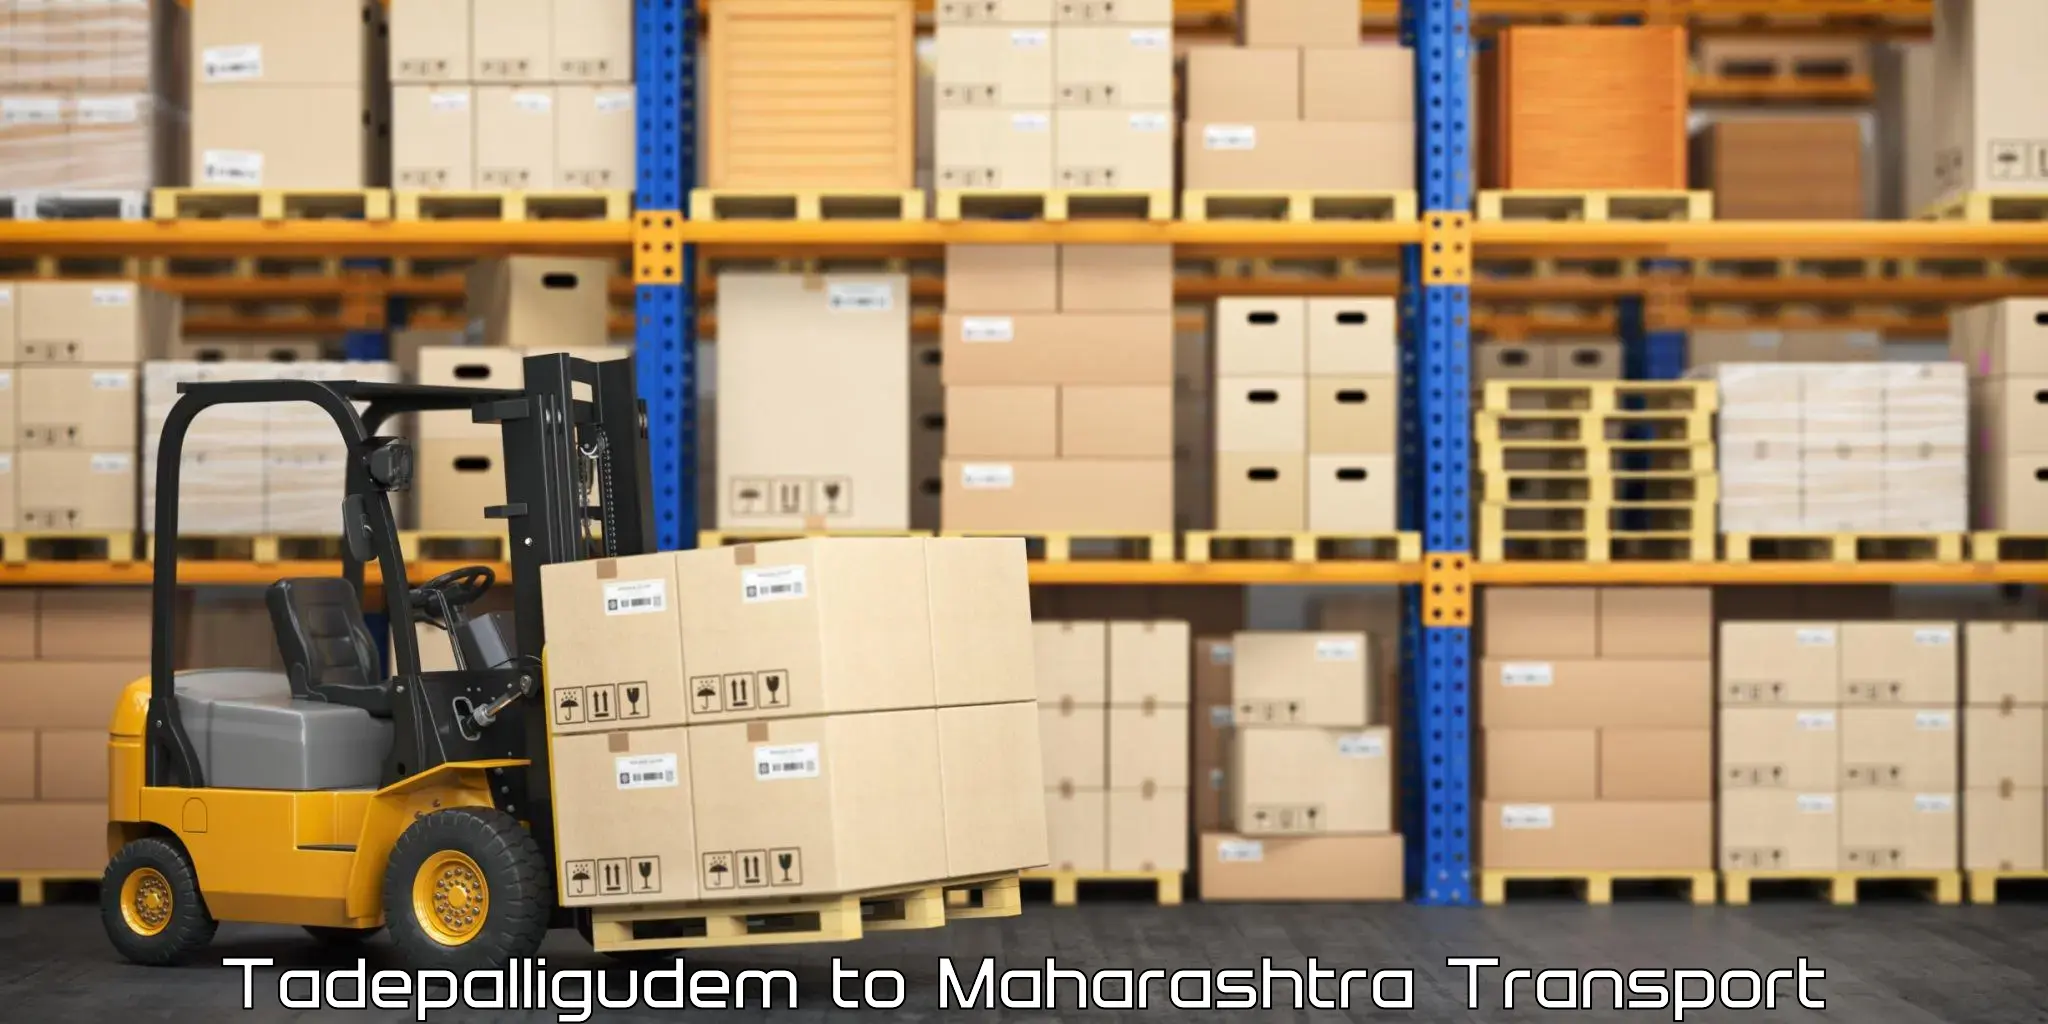 Lorry transport service Tadepalligudem to Dusarbid